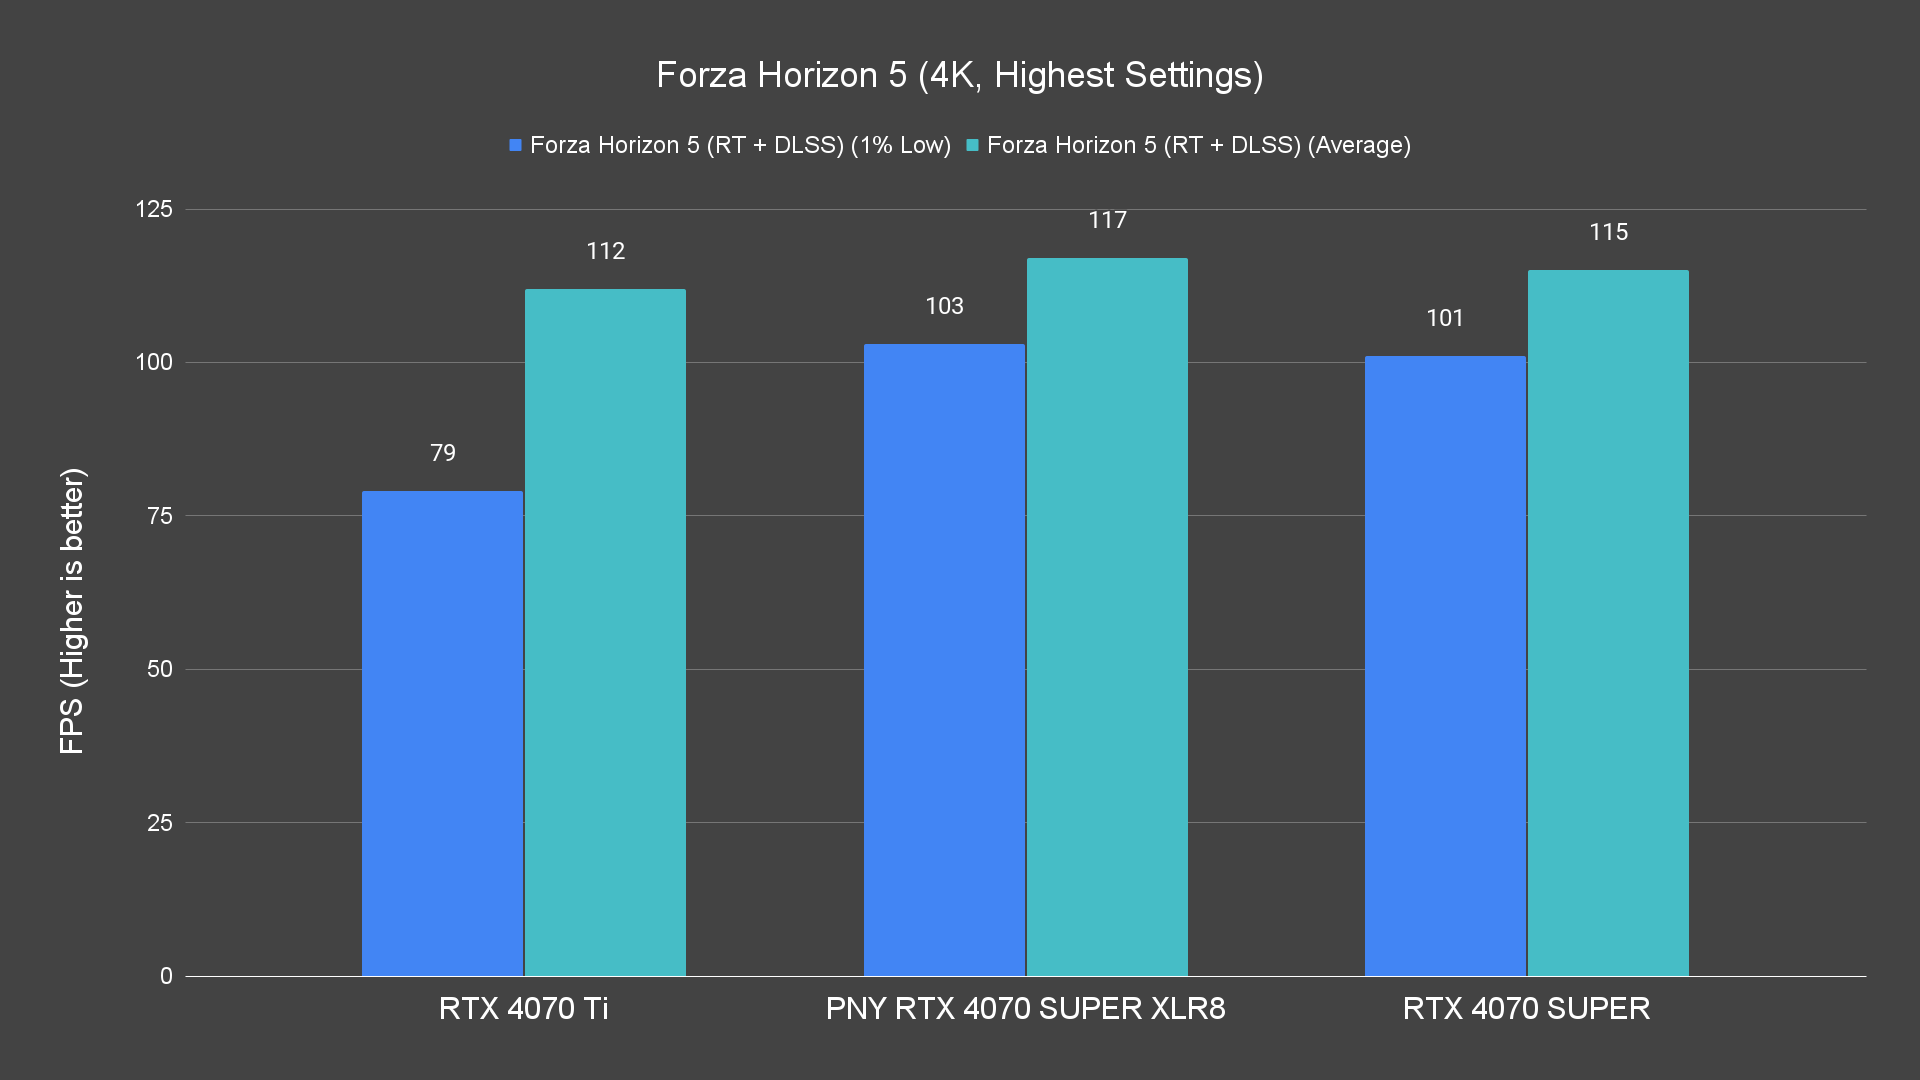 Forza Horizon 5 (4K, Highest Settings) Ray Tracing PNY RTX 4070 SUPER XLR8